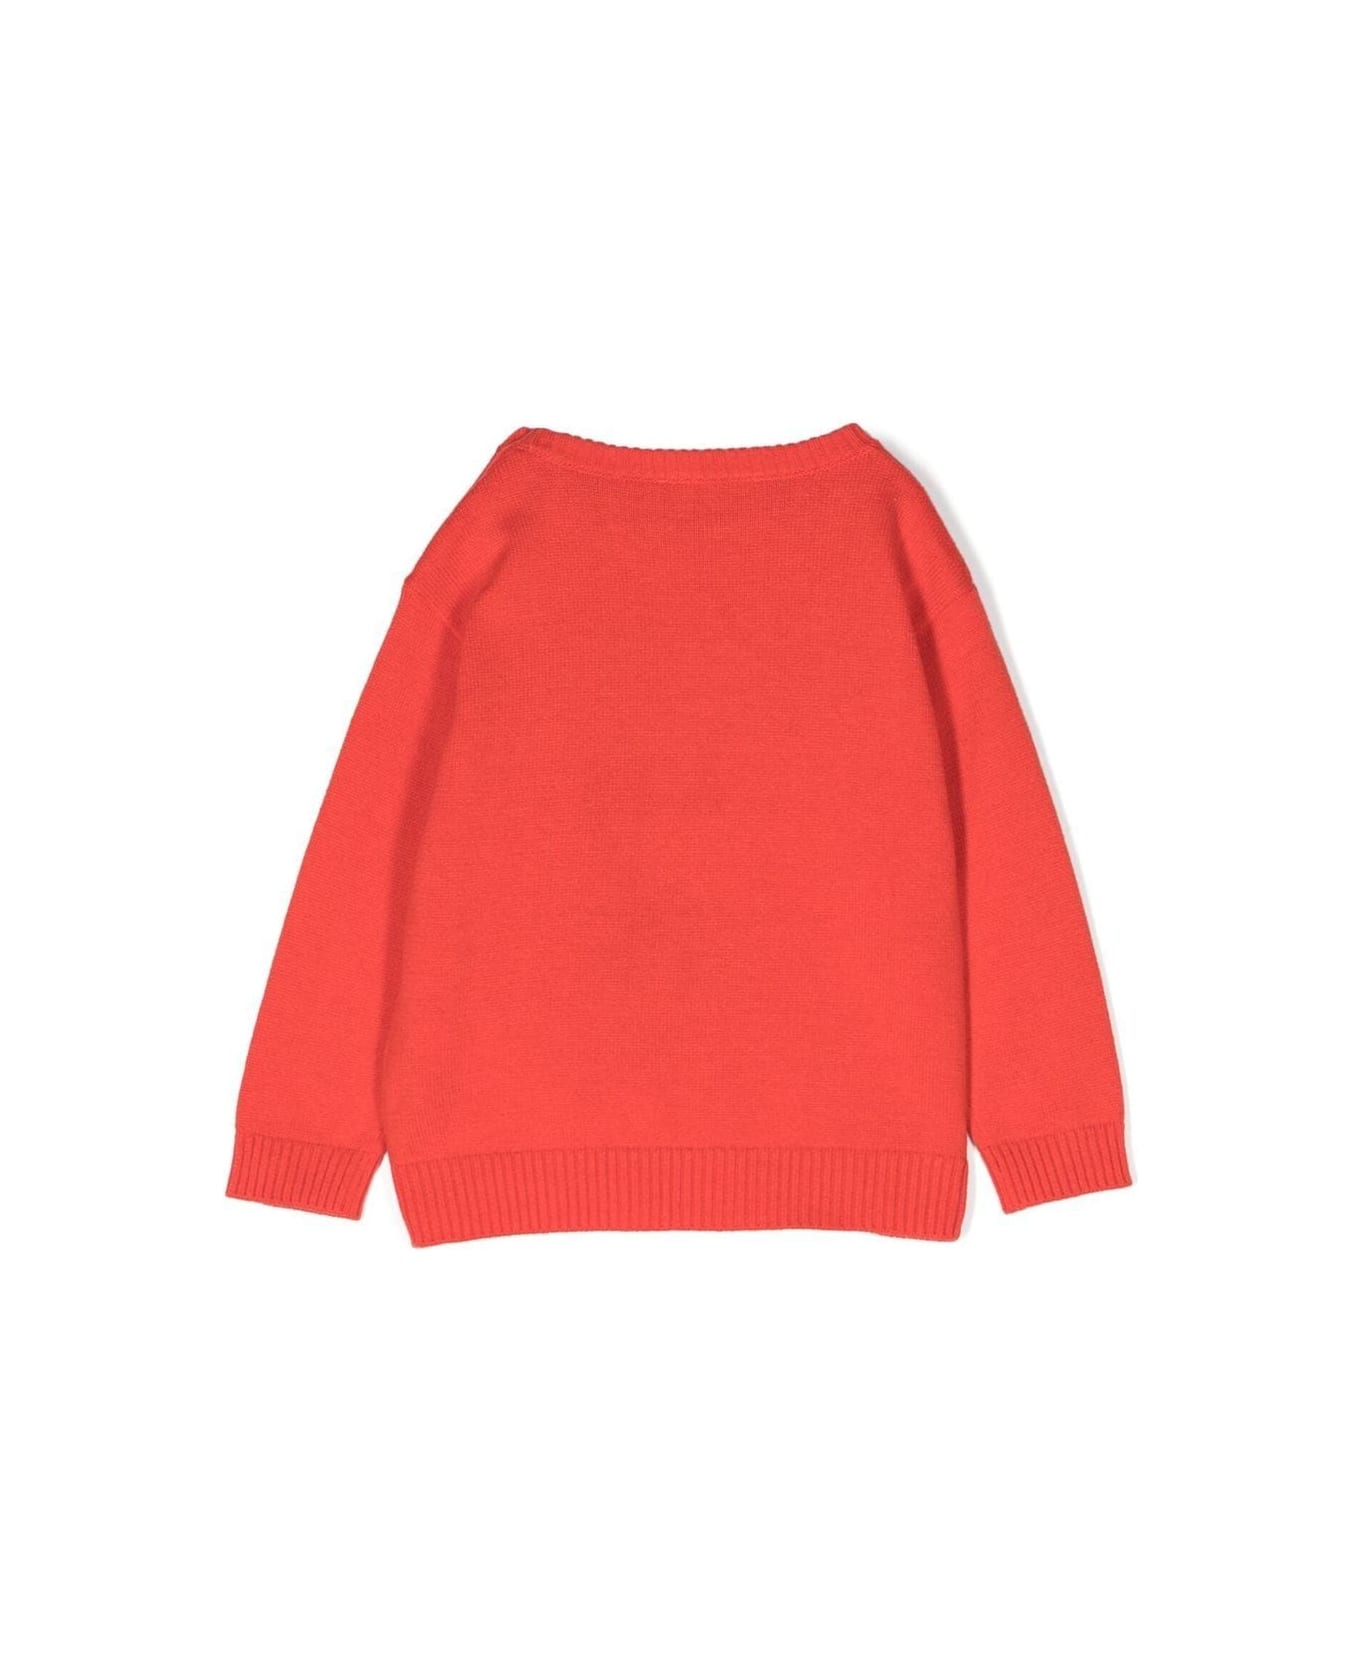 Moschino Teddy Bear Sweater - Red